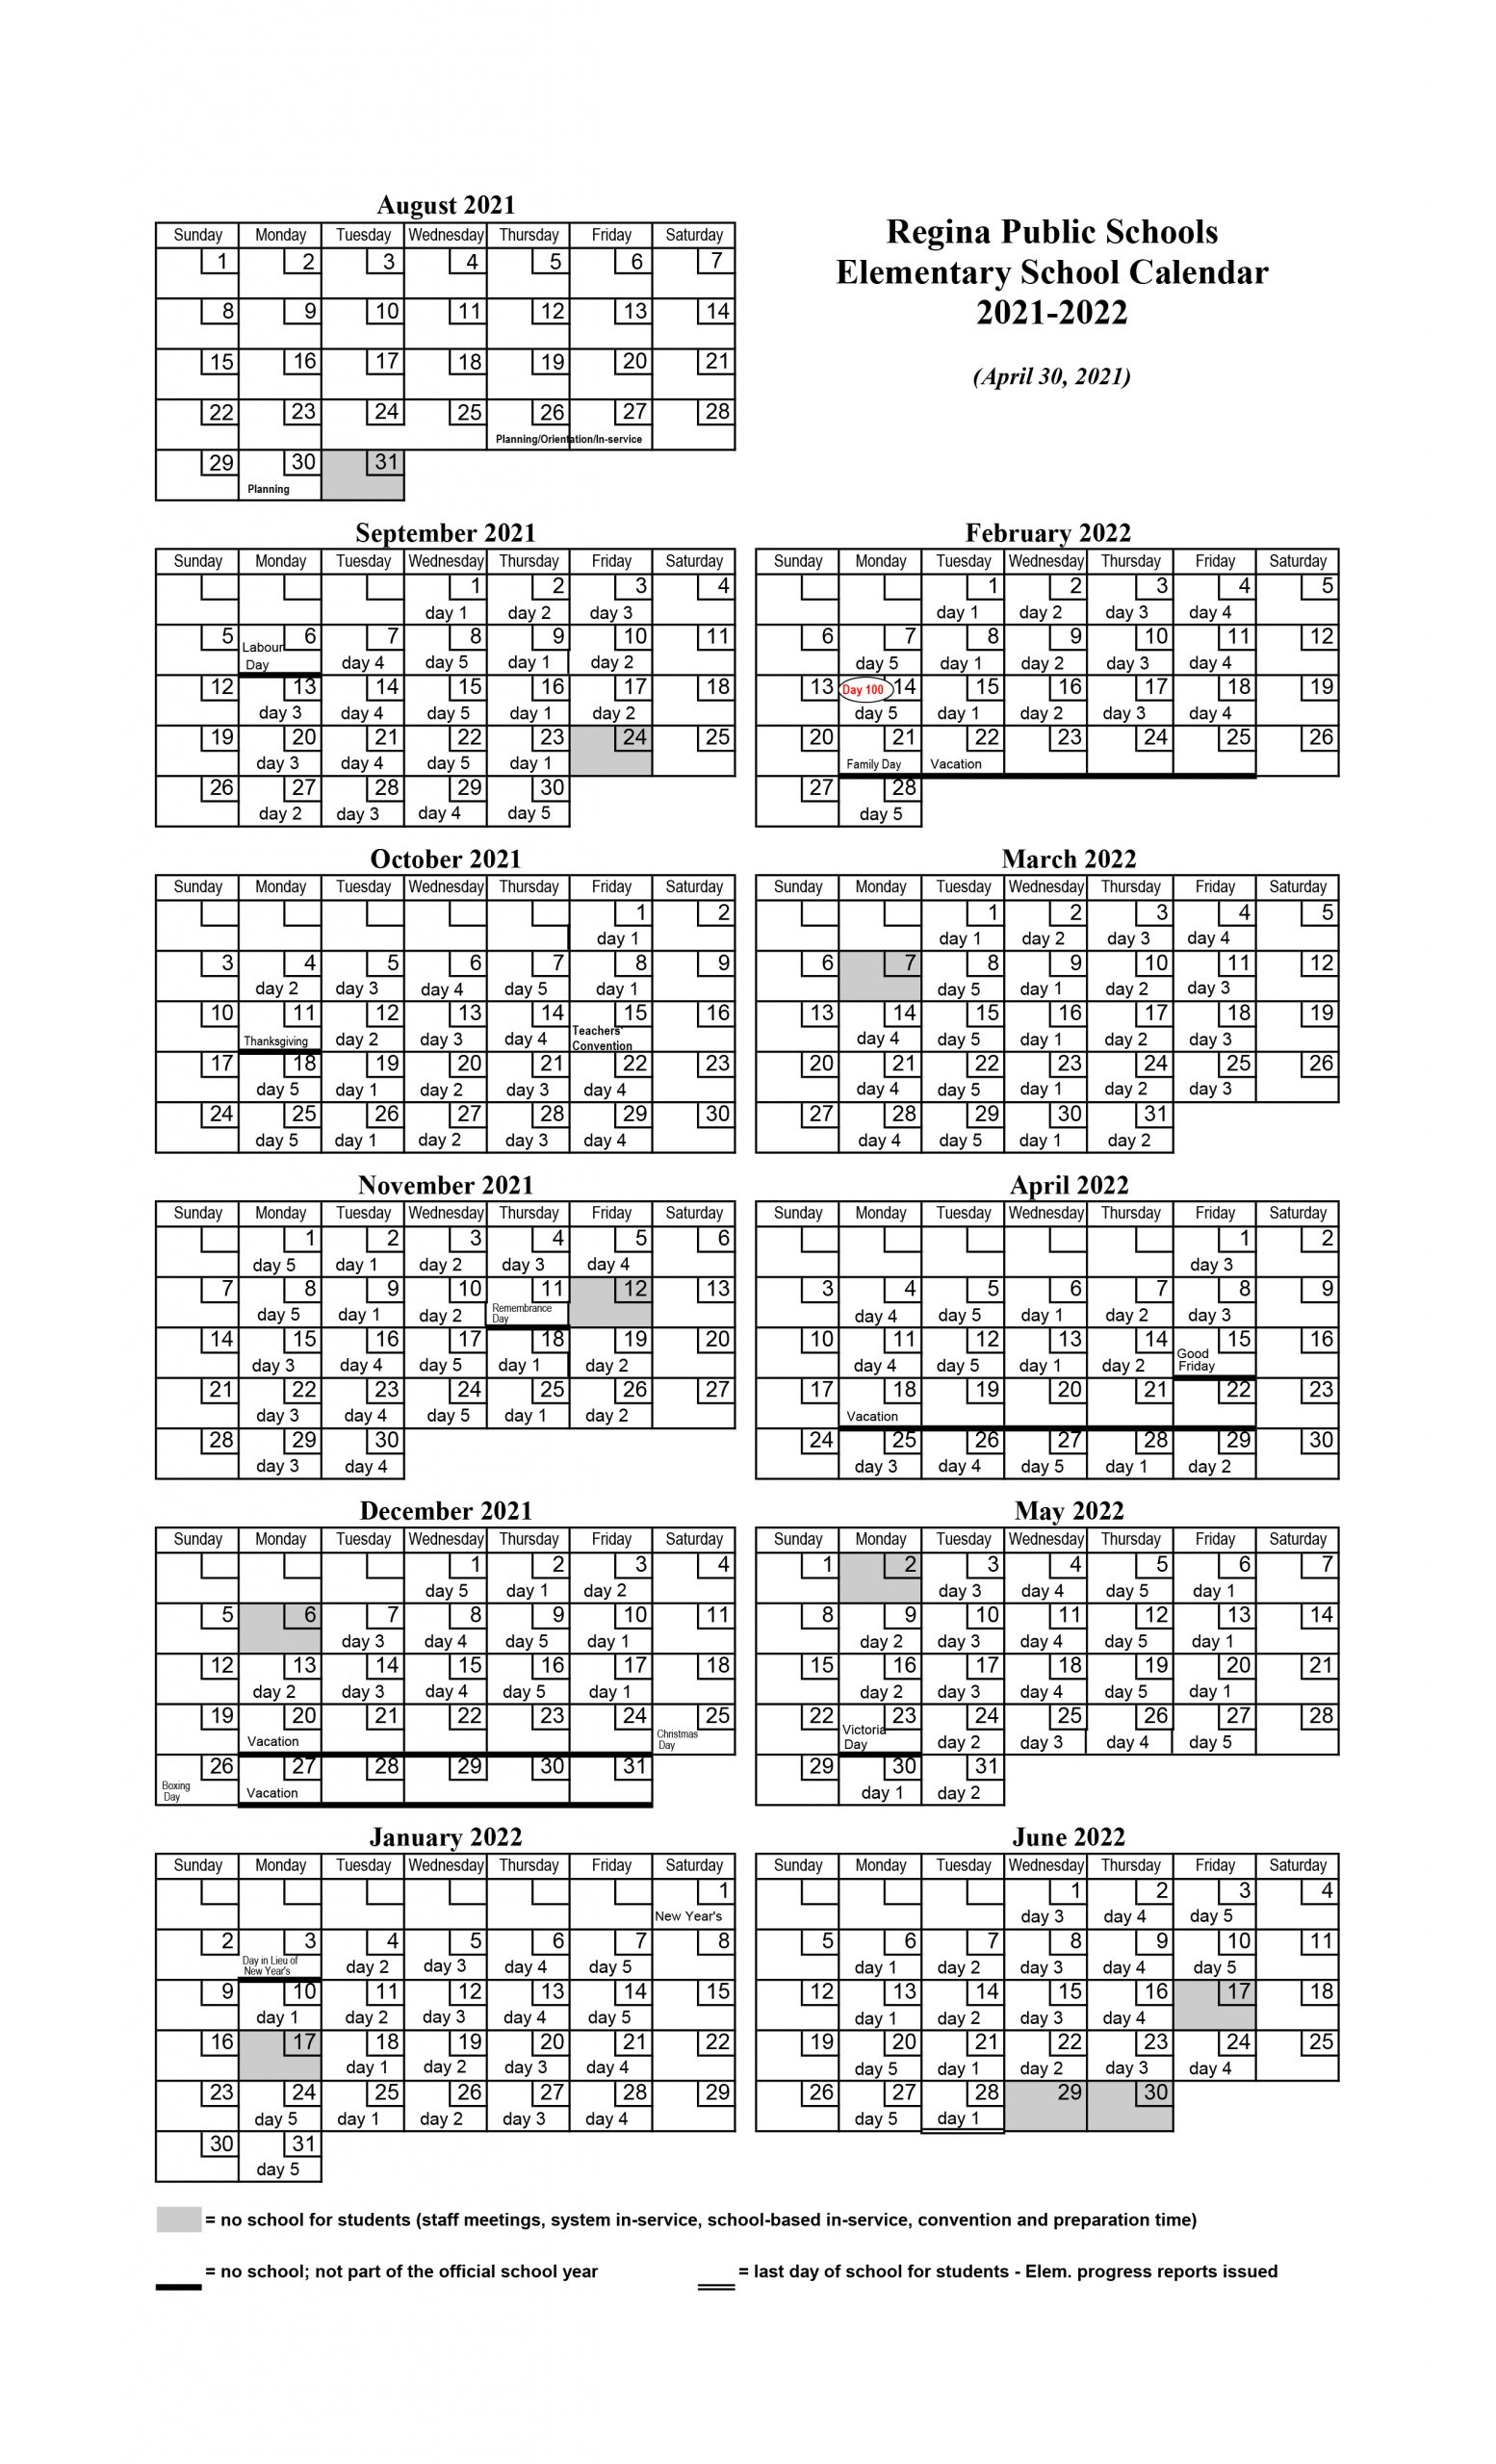 Elementary Day 1 5 Calendar 2021 22 Regina Public Schools